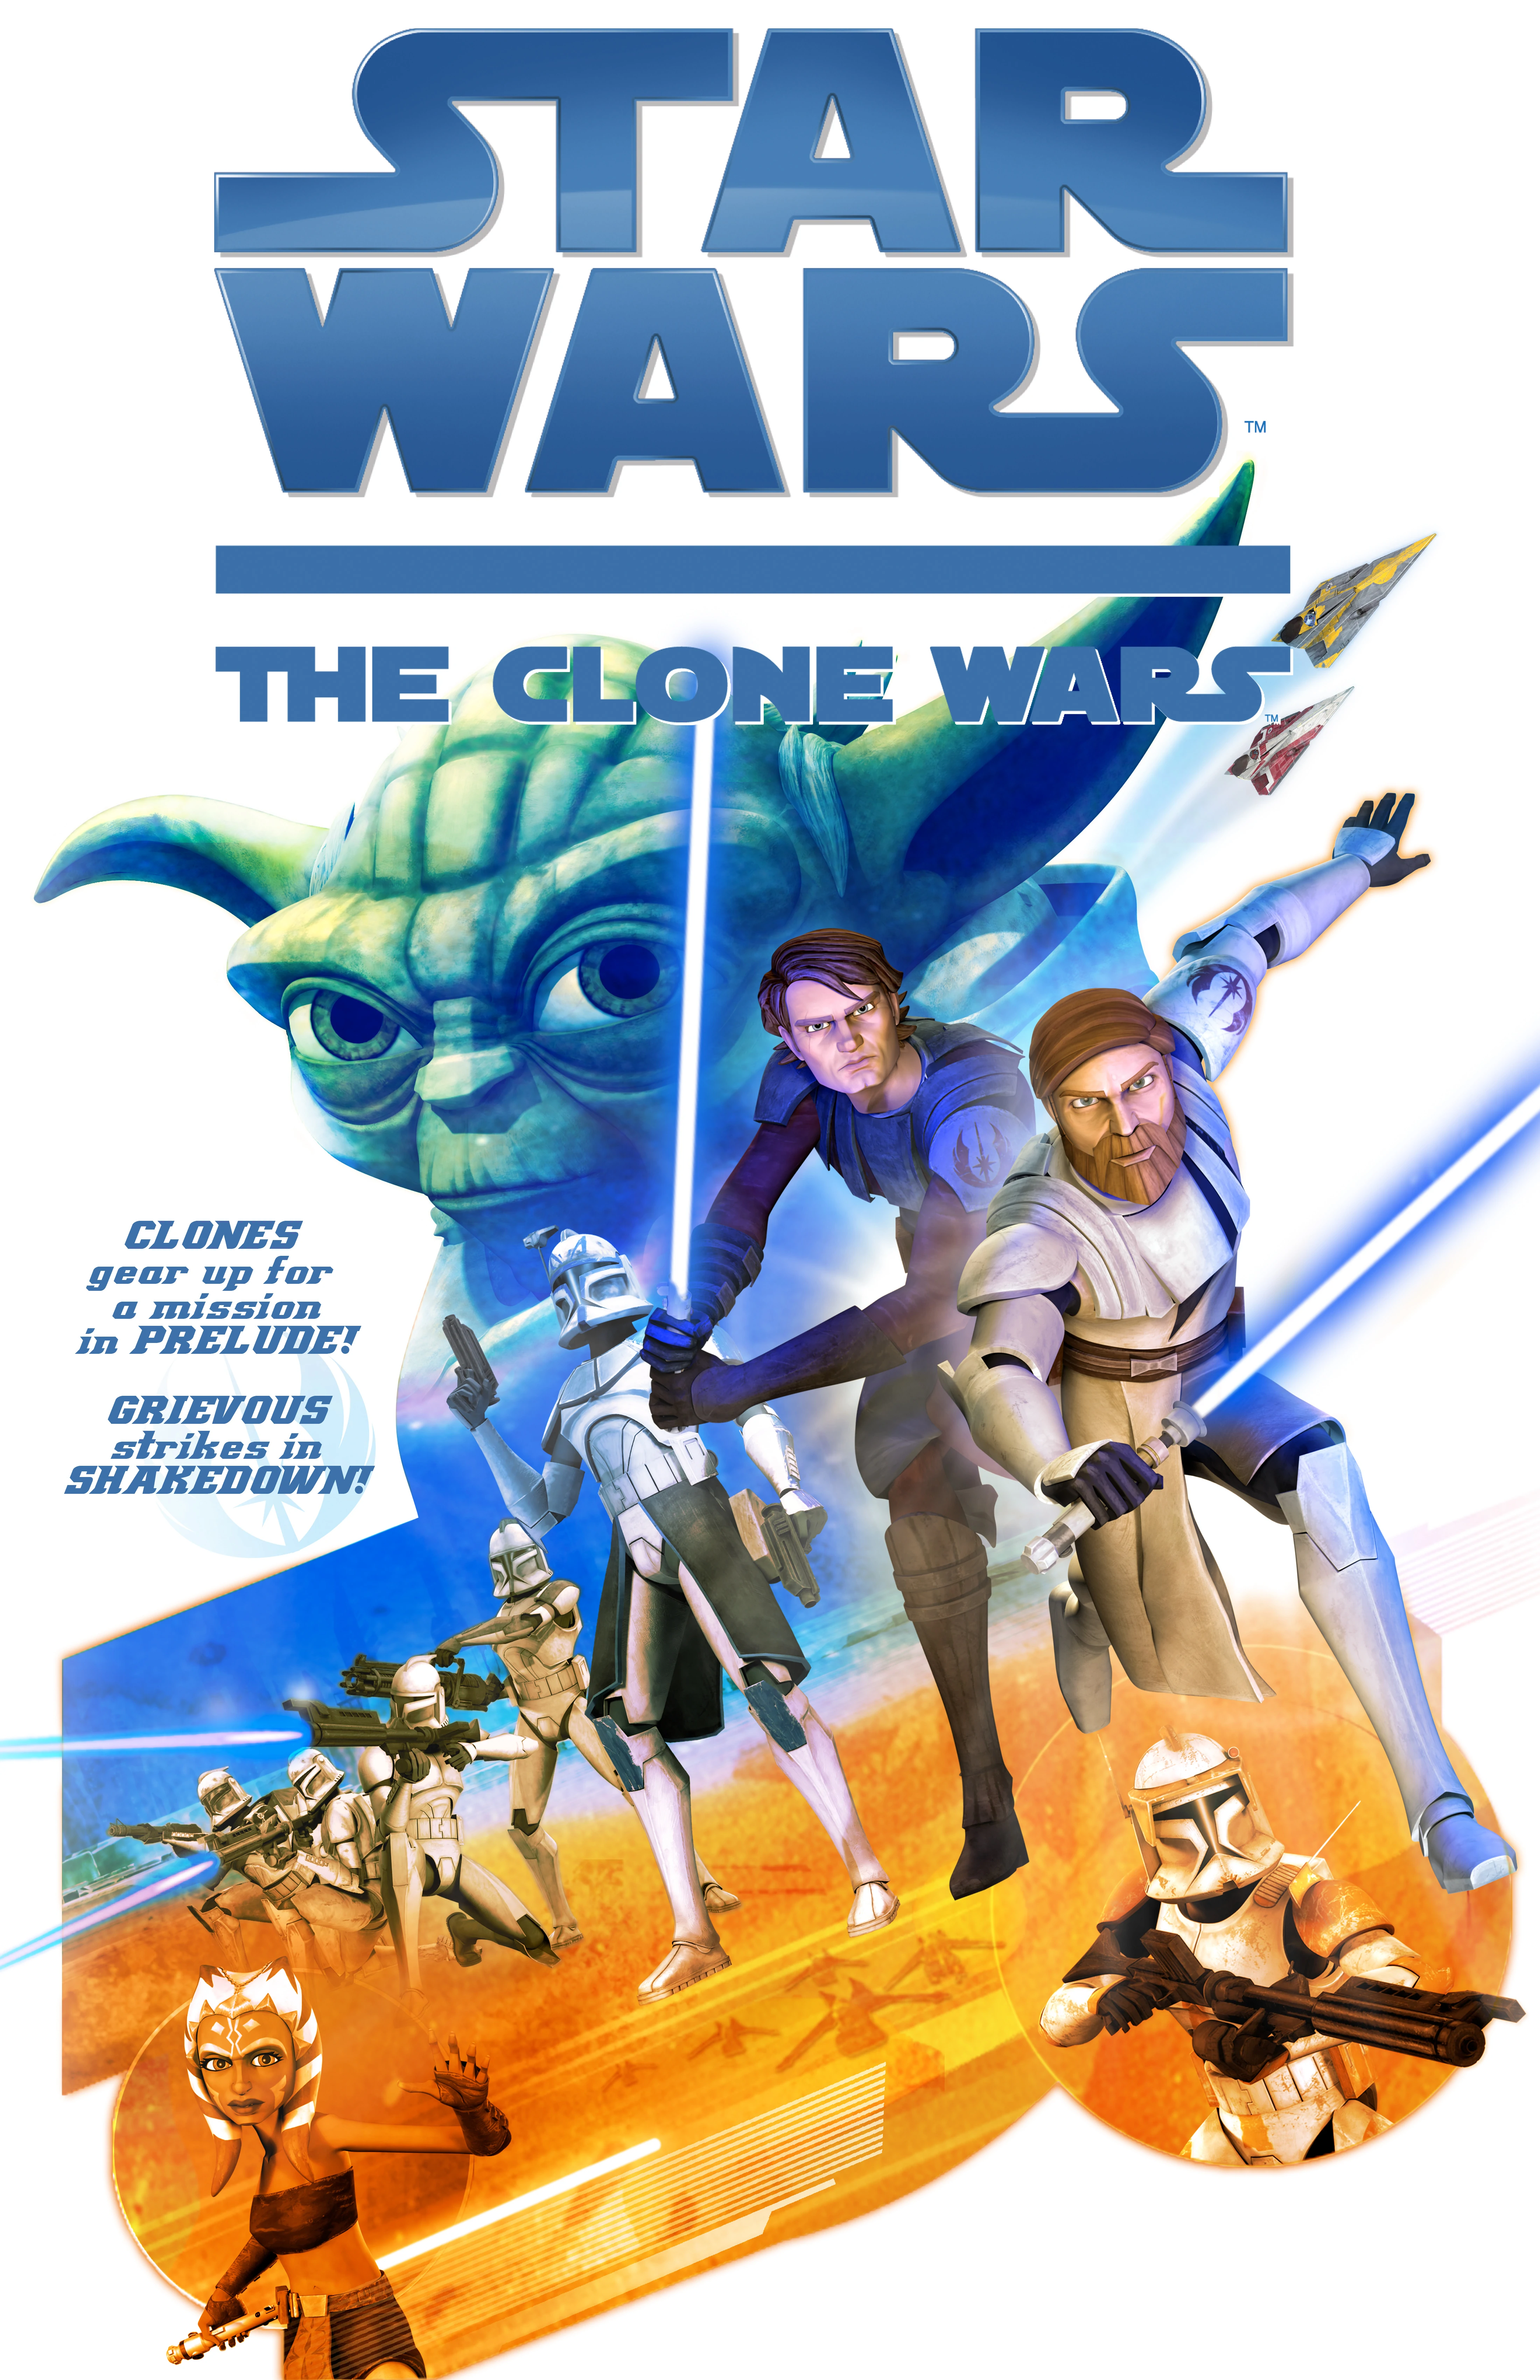 Star Wars: The Clone Wars Main Poster